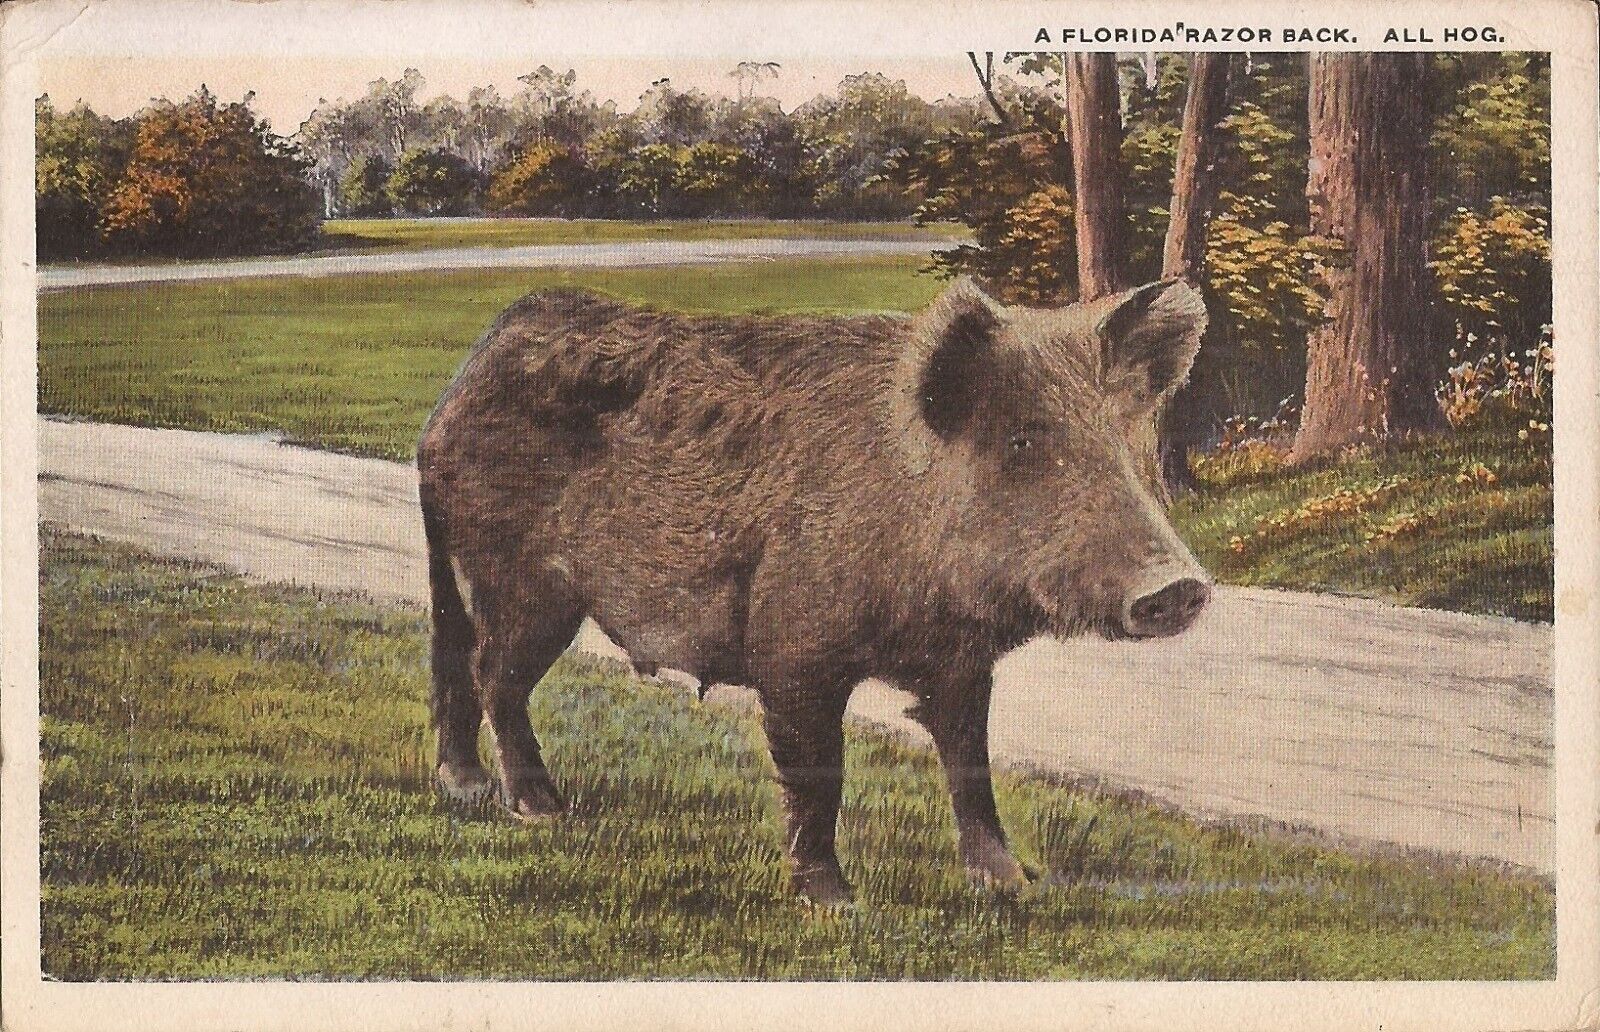 Florida Razor Back Hog - 1918